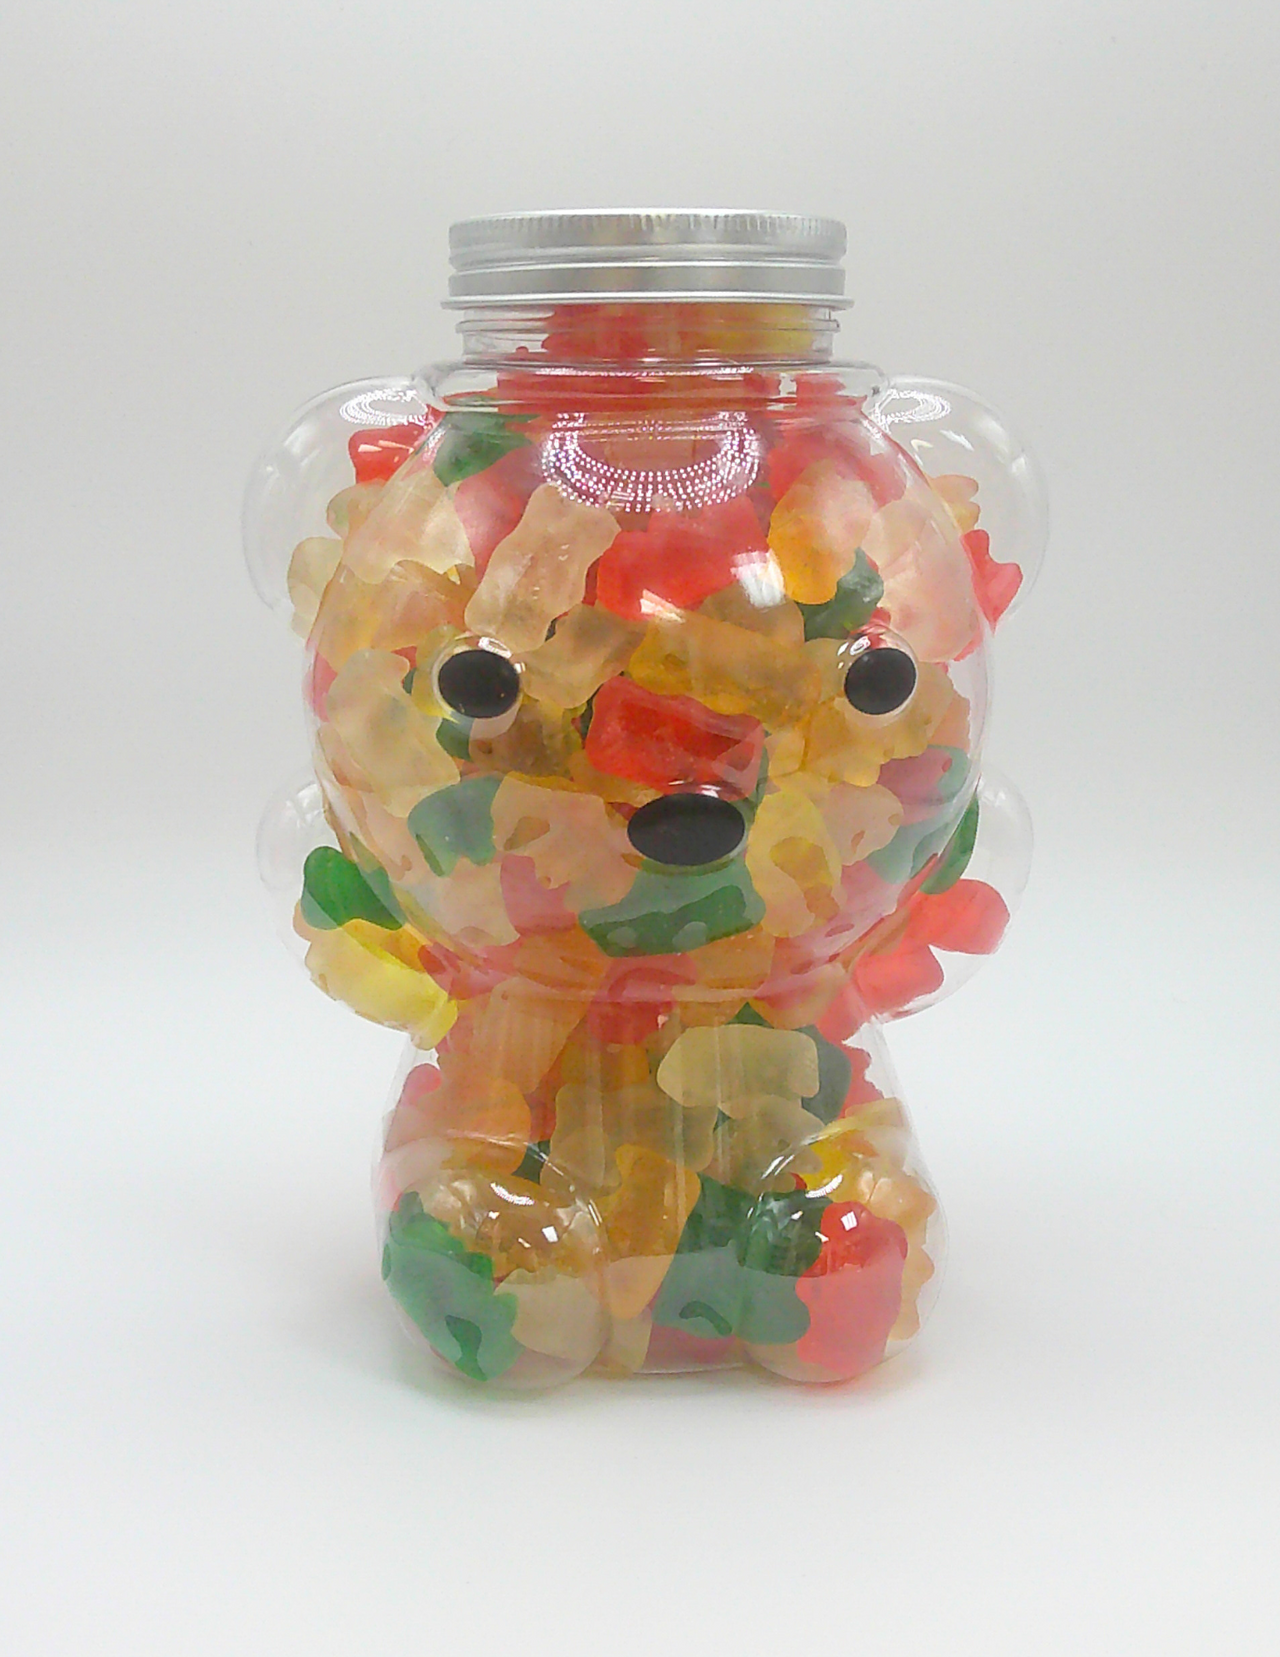 Jar of Original Gummy Bears